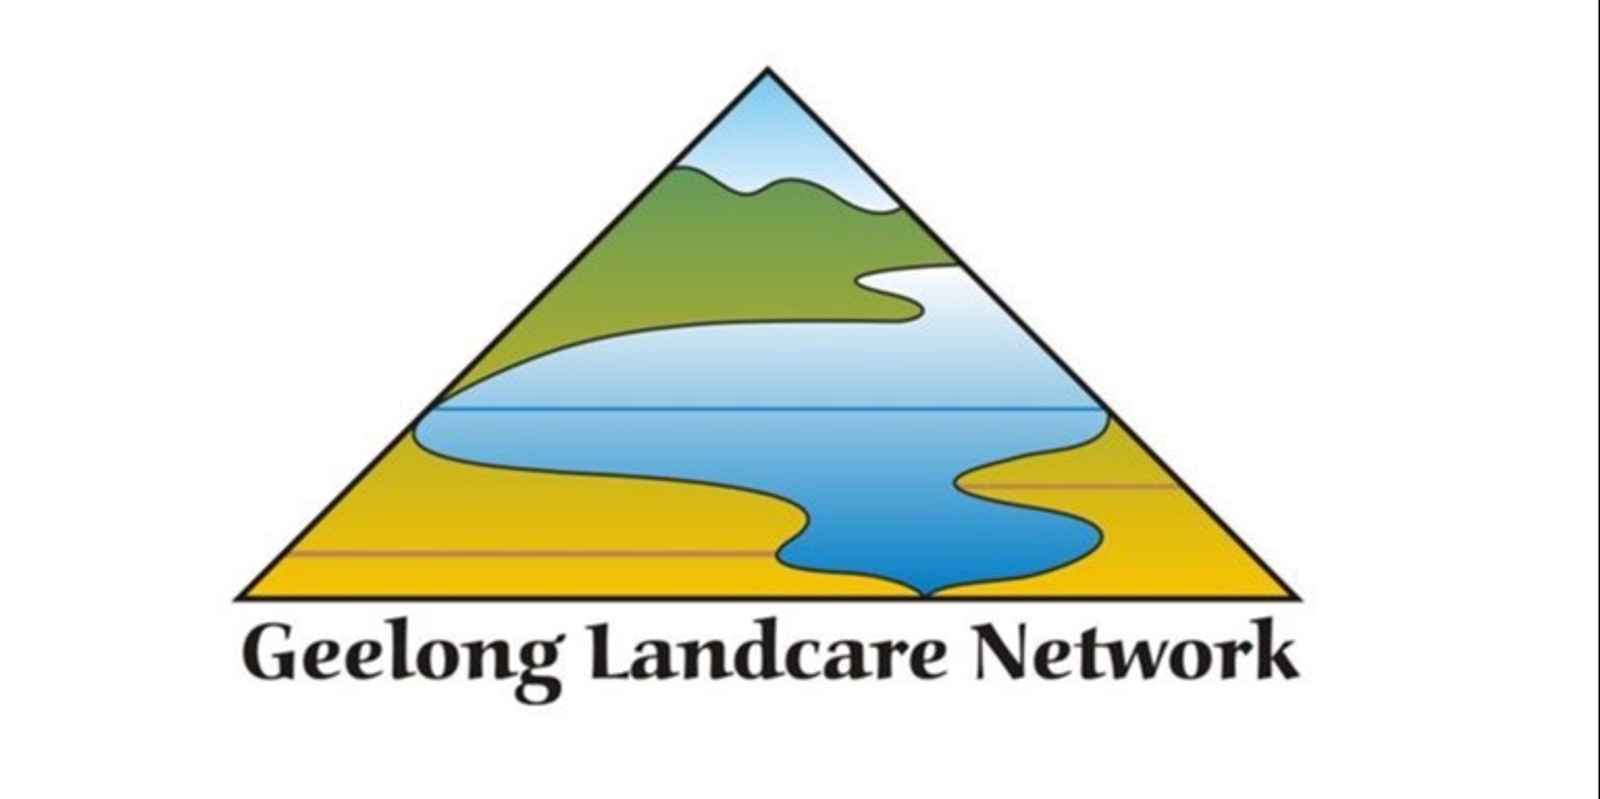 Geelong Landcare Network's banner